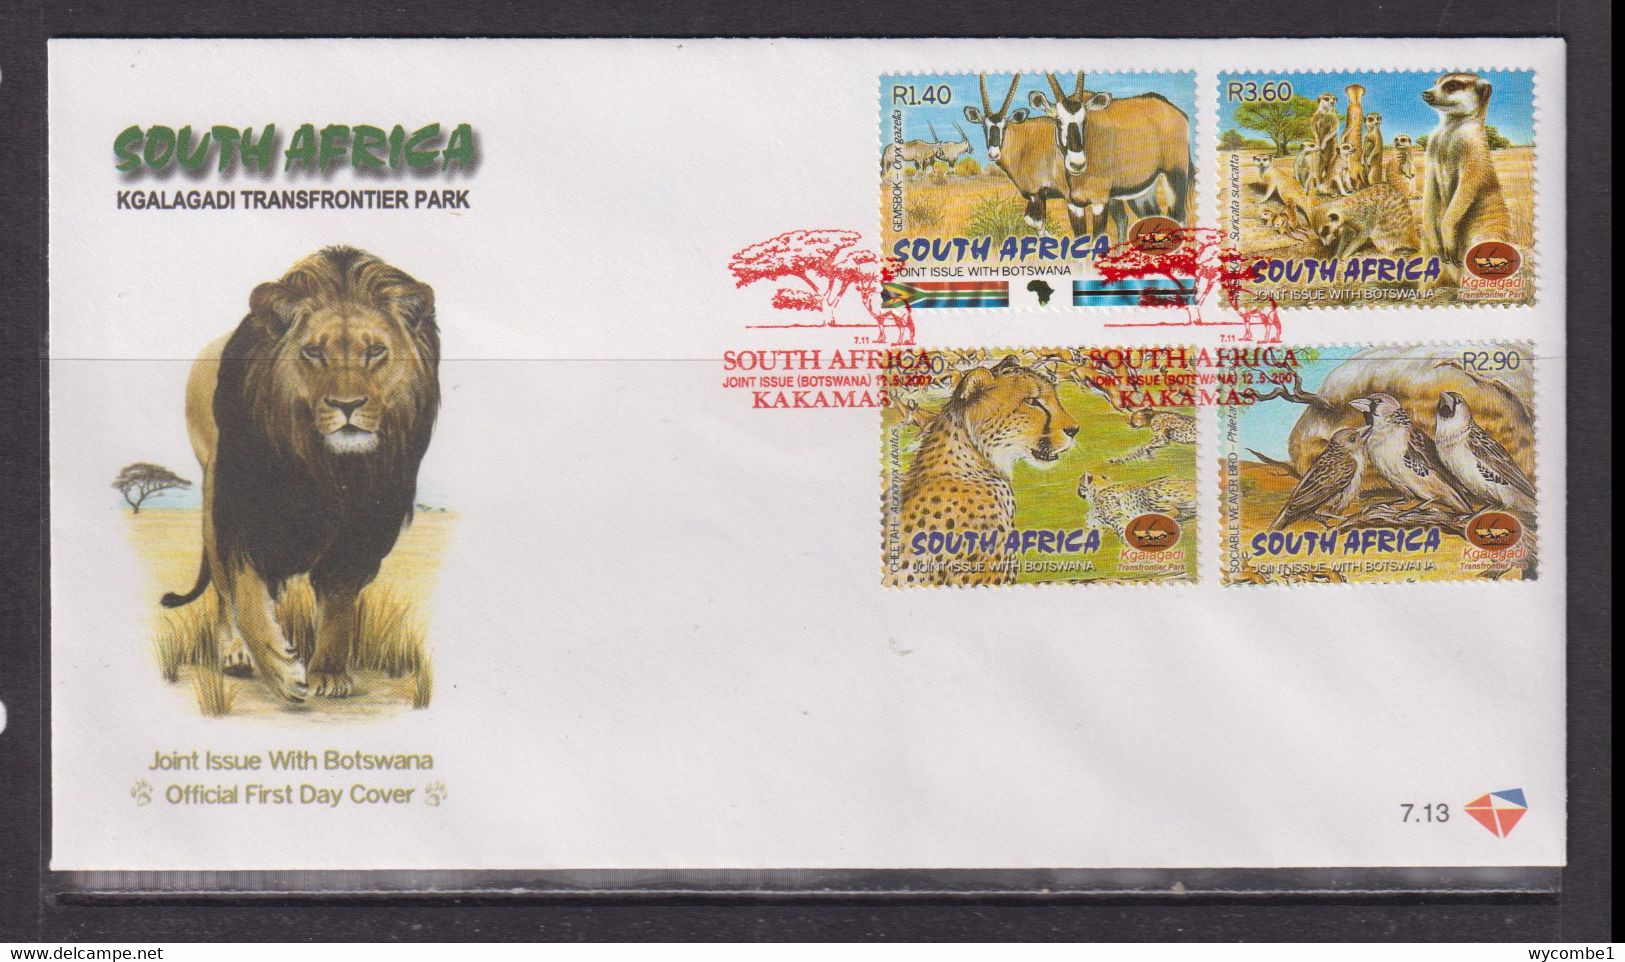 SOUTH AFRICA - 2001 Kgalagadi Transfrontier Park FDC As Scan - Briefe U. Dokumente